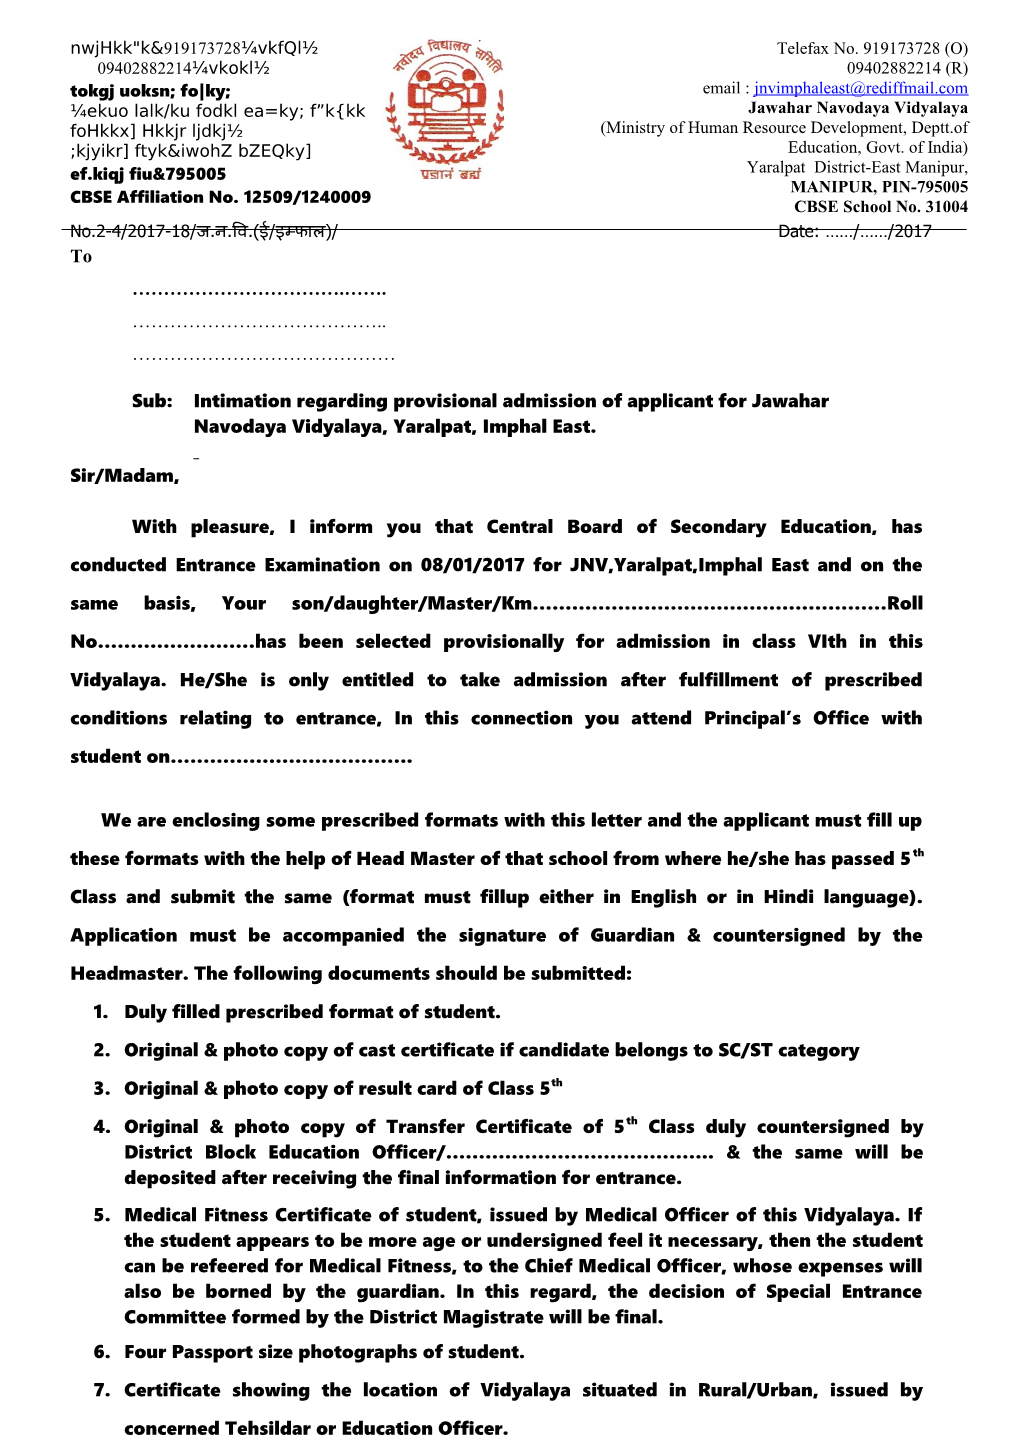 Sub:Intimation Regarding Provisional Admission of Applicant for Jawahar Navodaya Vidyalaya